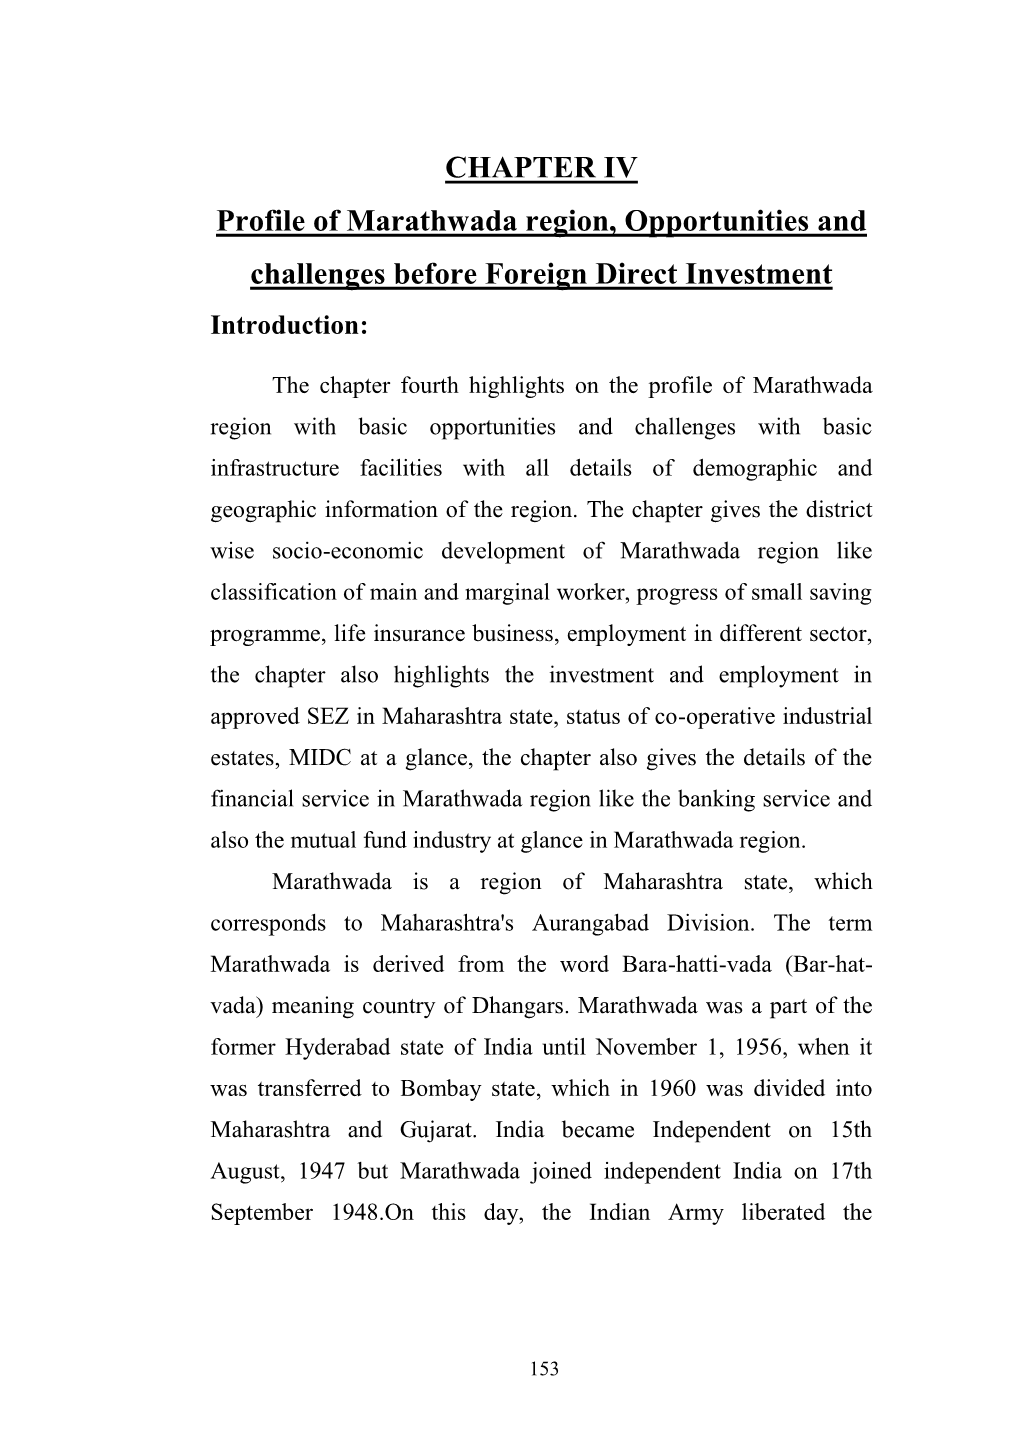 Economic and Industrial Background of Marathwada Region